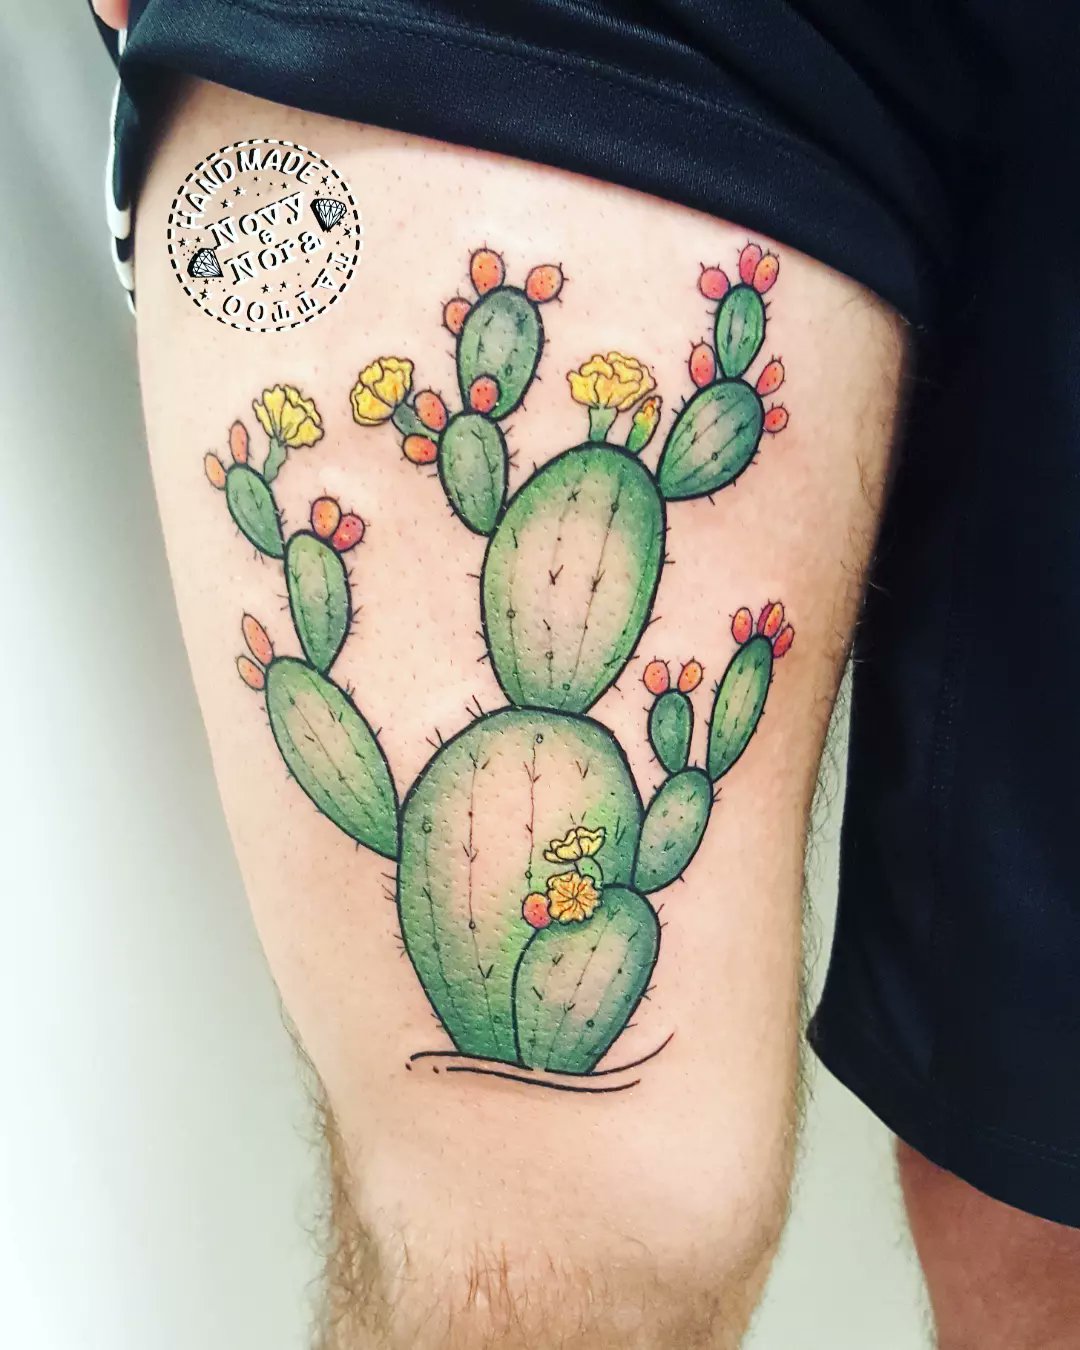 Novytattoo Handmade on Twitter Prickly pear  ficodindia onmyskin  indelible pricklypear cactus cactuslover cactustattoo ficusindica  opuntia tattoo tattooedmen inkedmen flowers handmadetattoostudio  carpi ink art  httpstco 